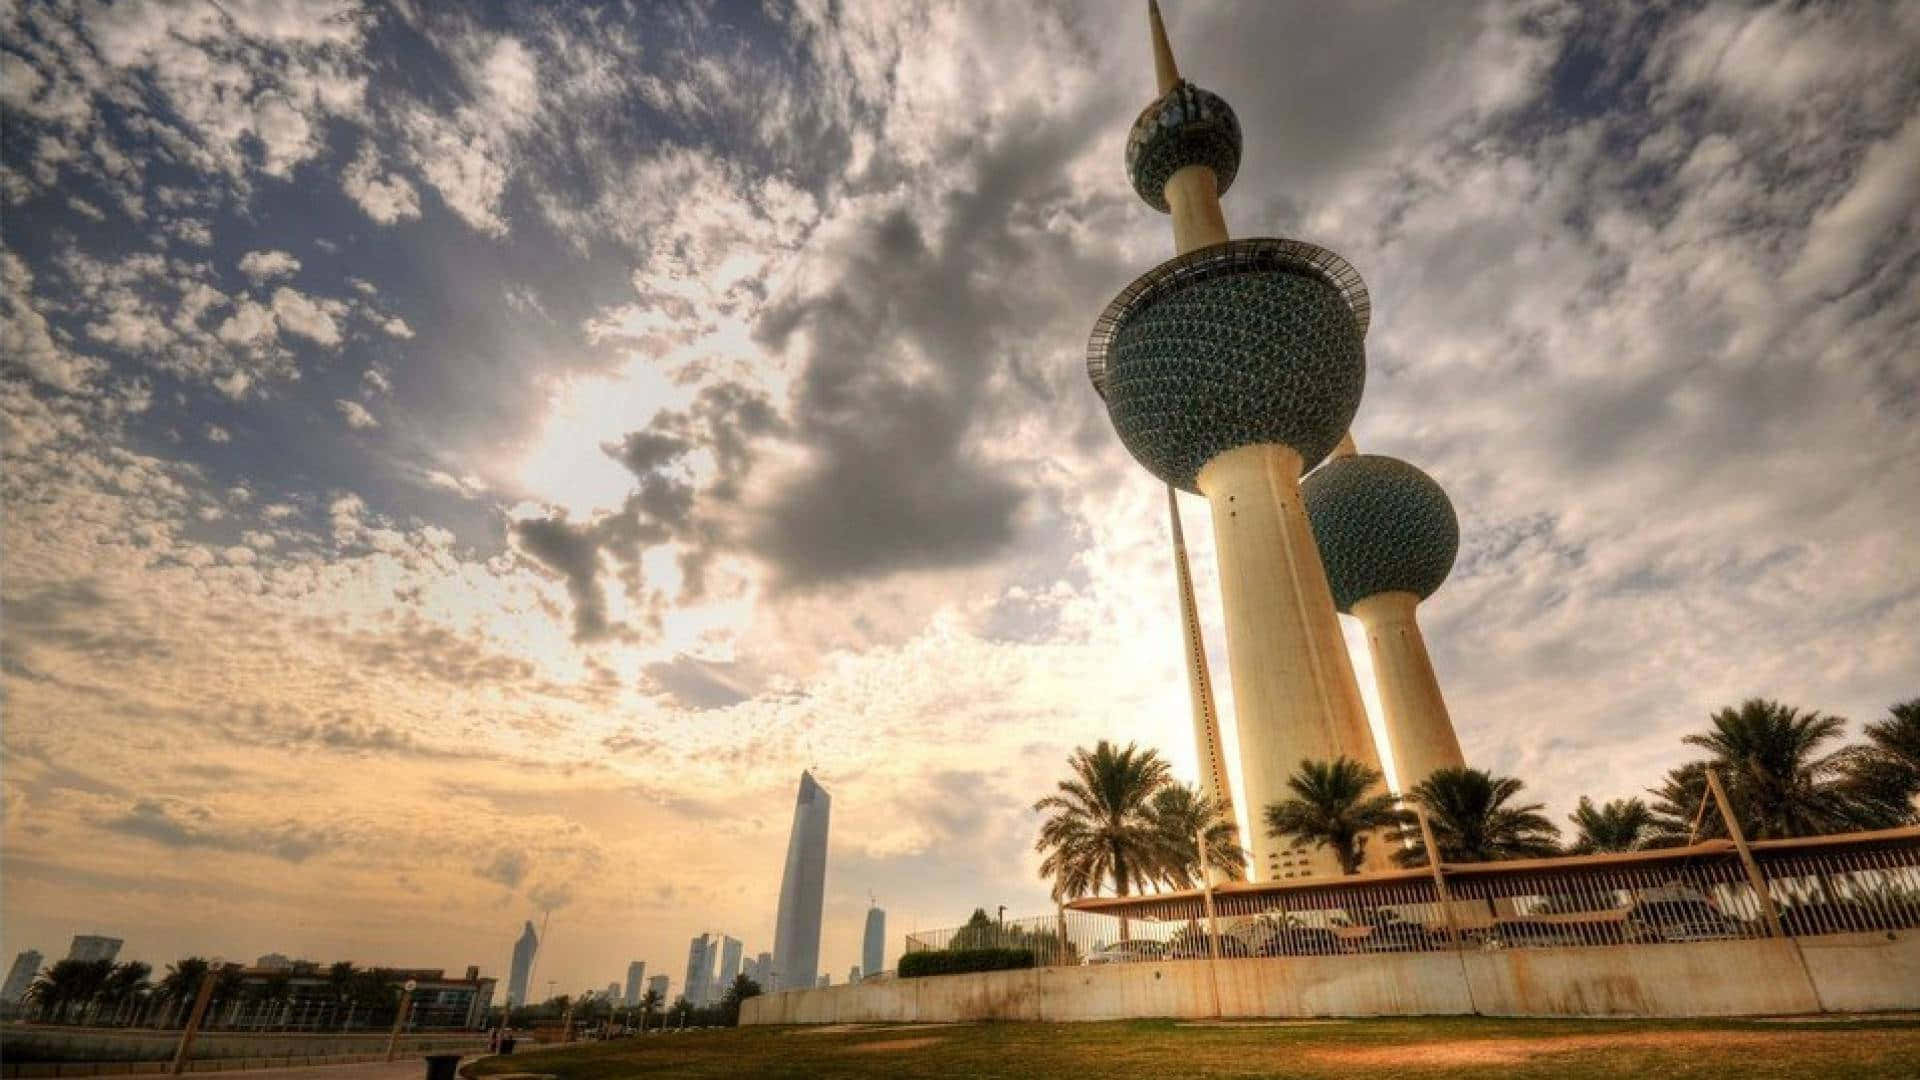 Kuwaittowers Under Molnig Eftermiddagshimmel Wallpaper